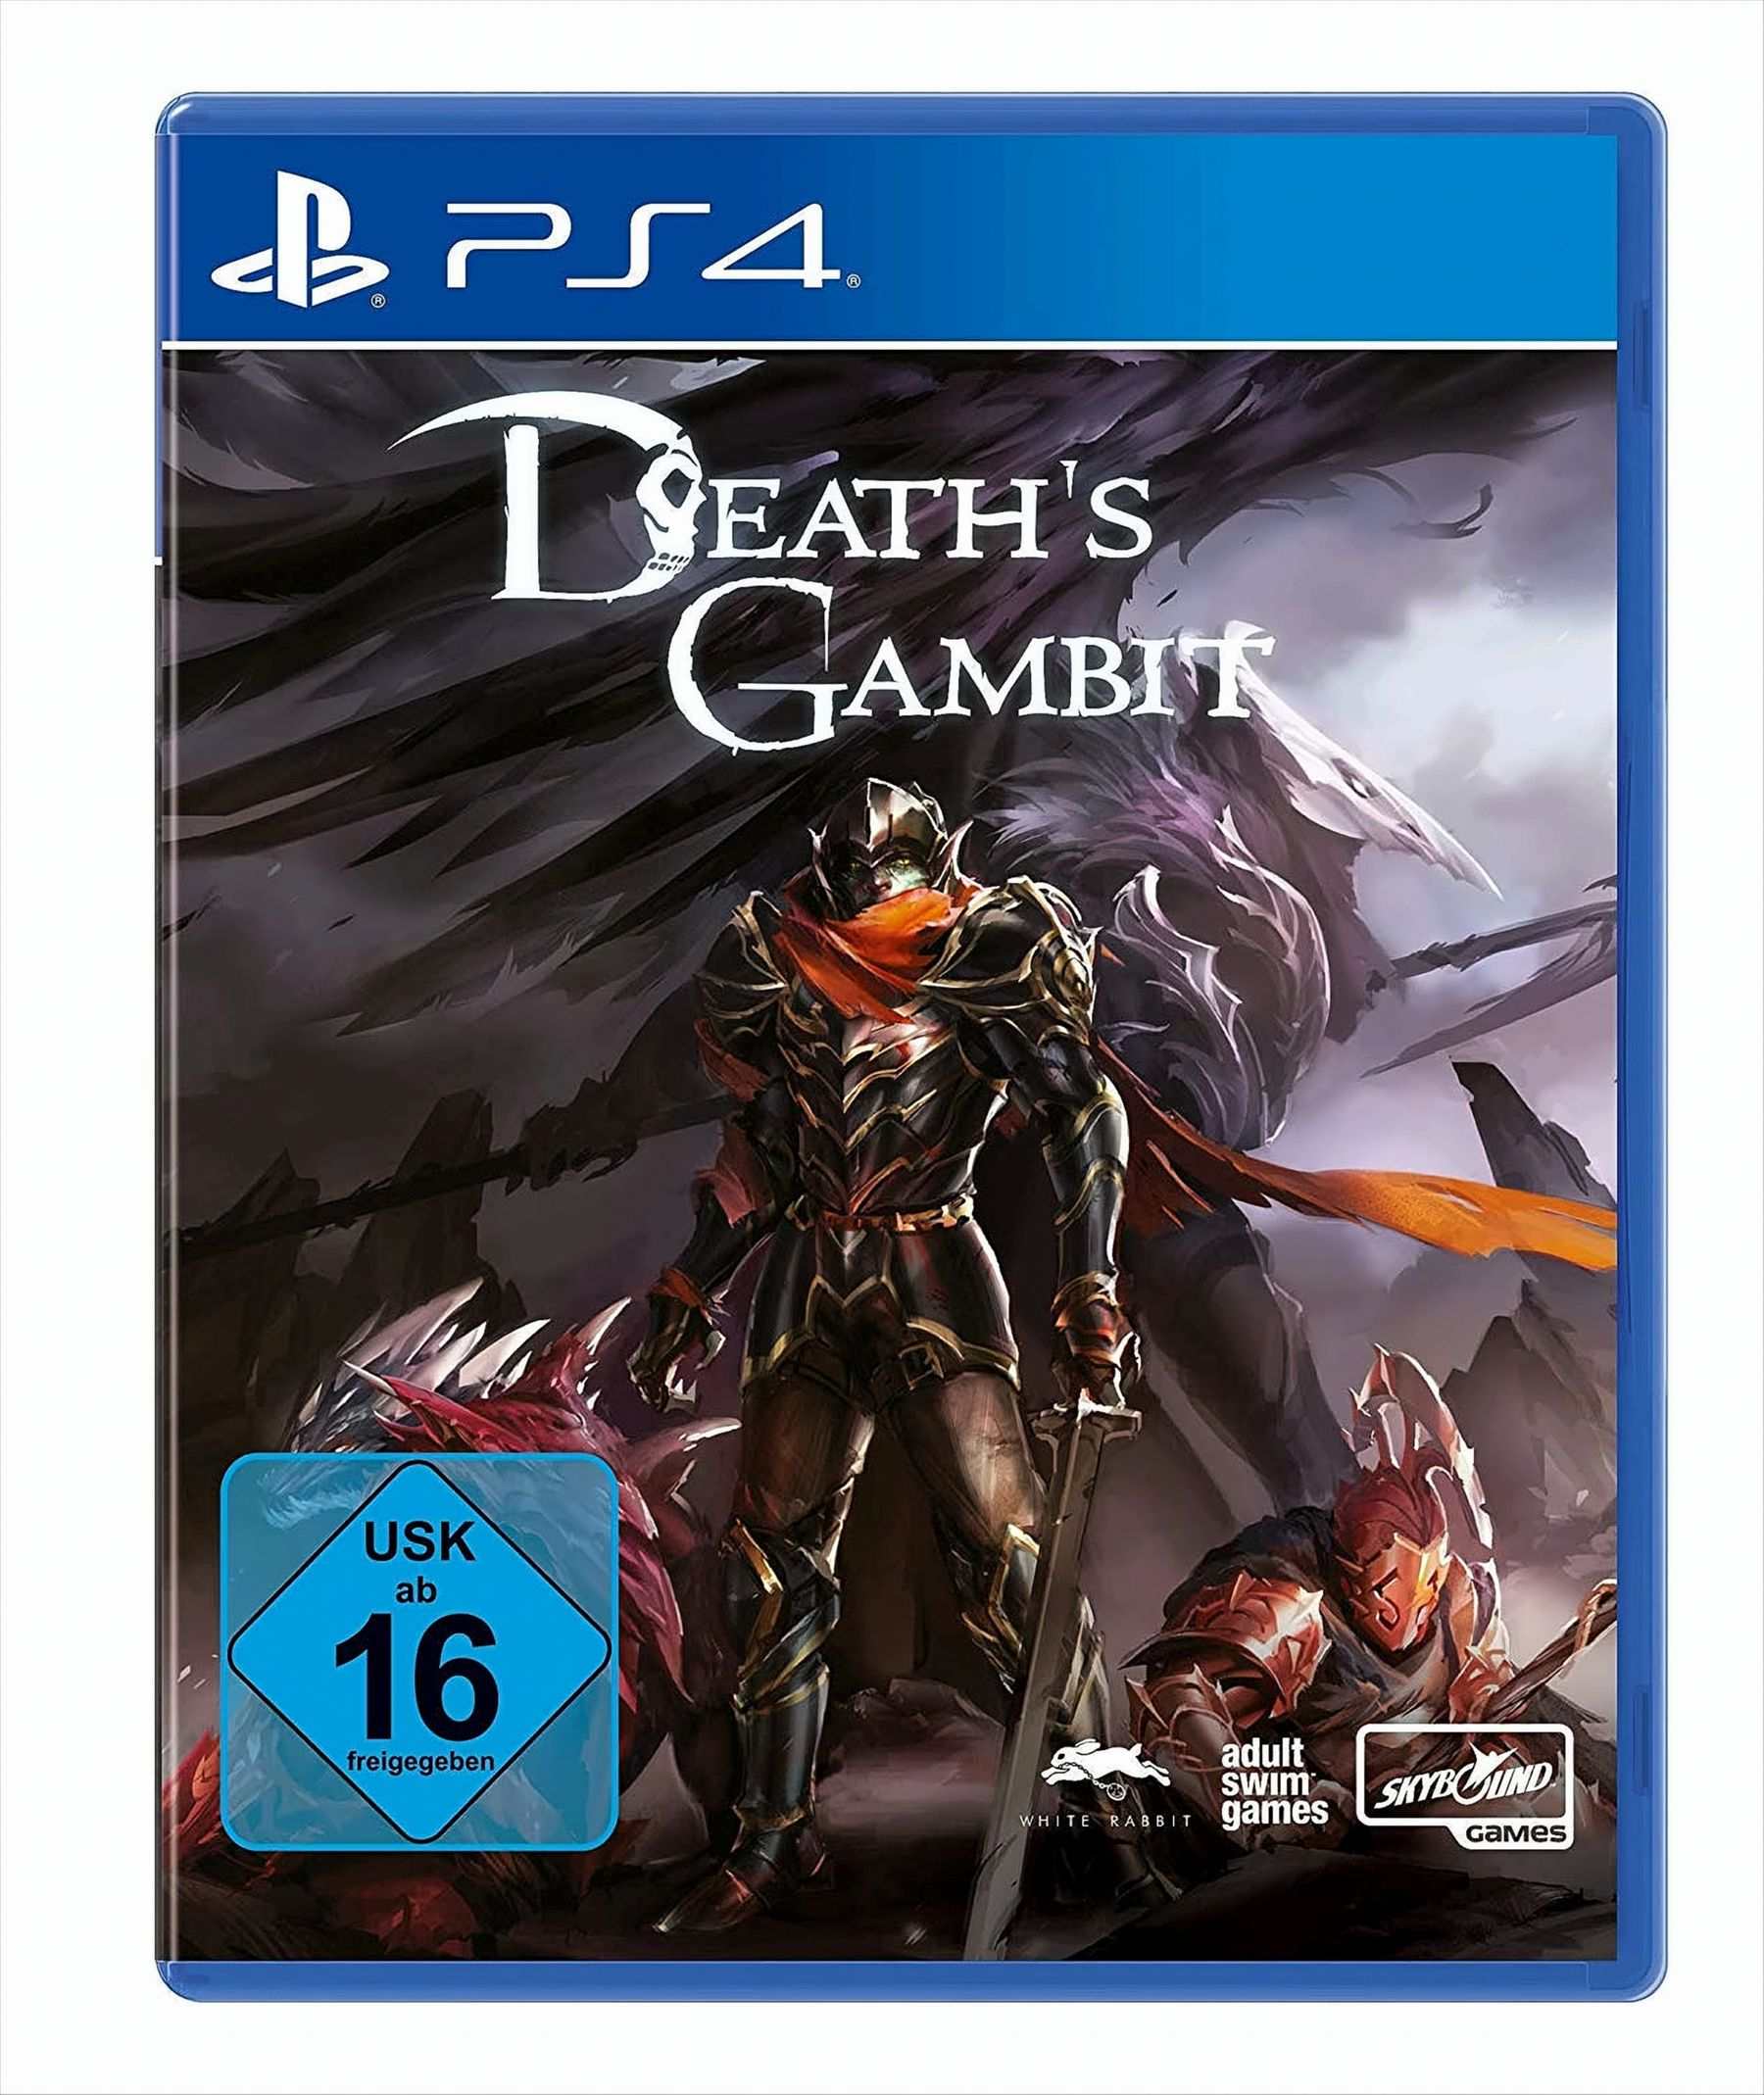 PS-4 4] Gambit - [PlayStation Death